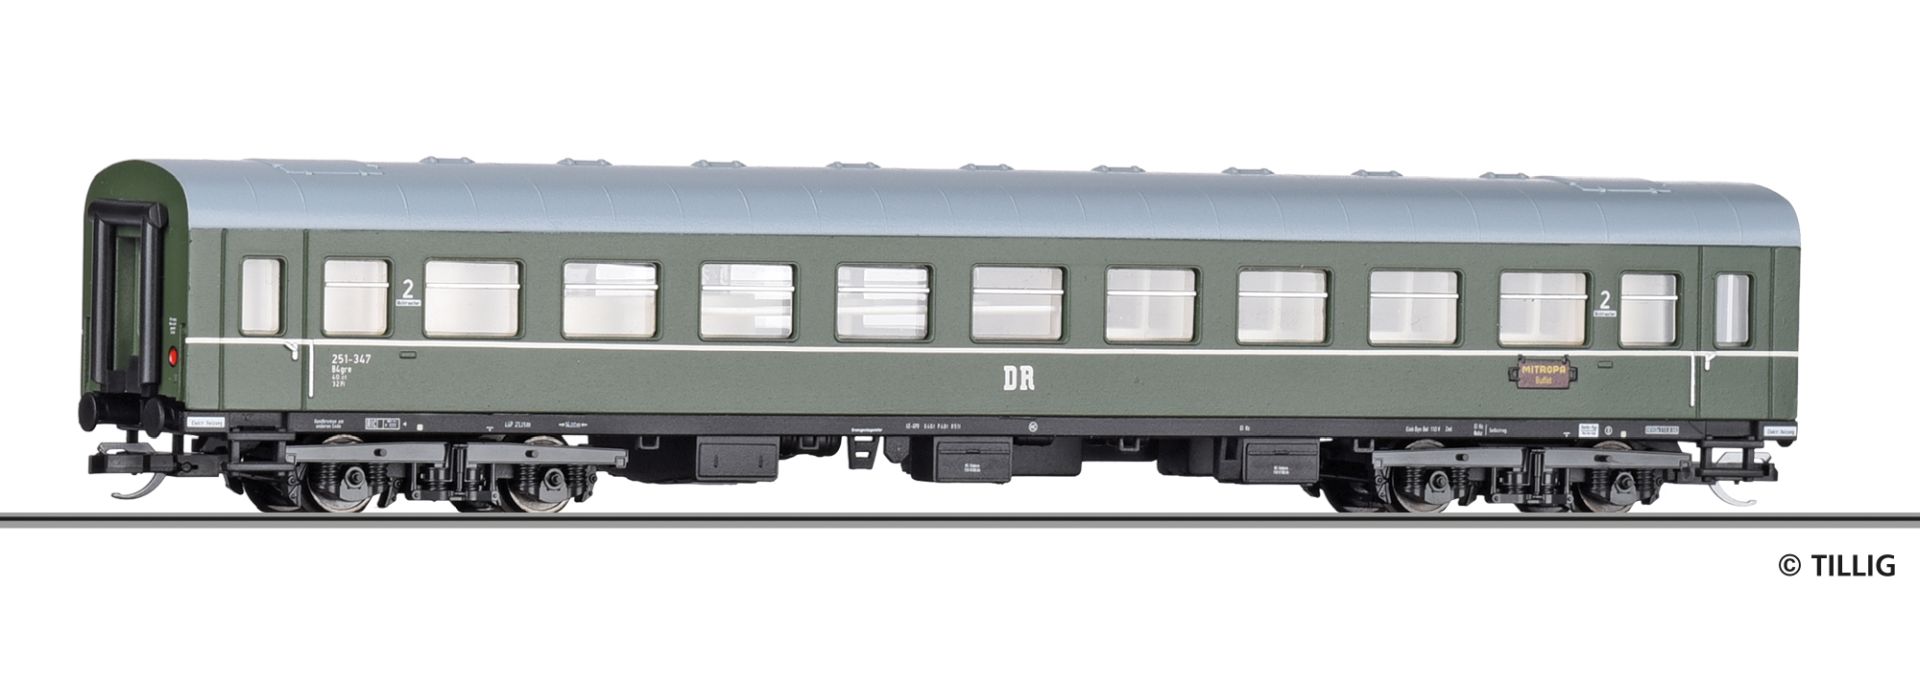 Tillig 95626 - Personenwagen B4gre, 2. Klasse mit Buffetabteil, DR, Ep.III